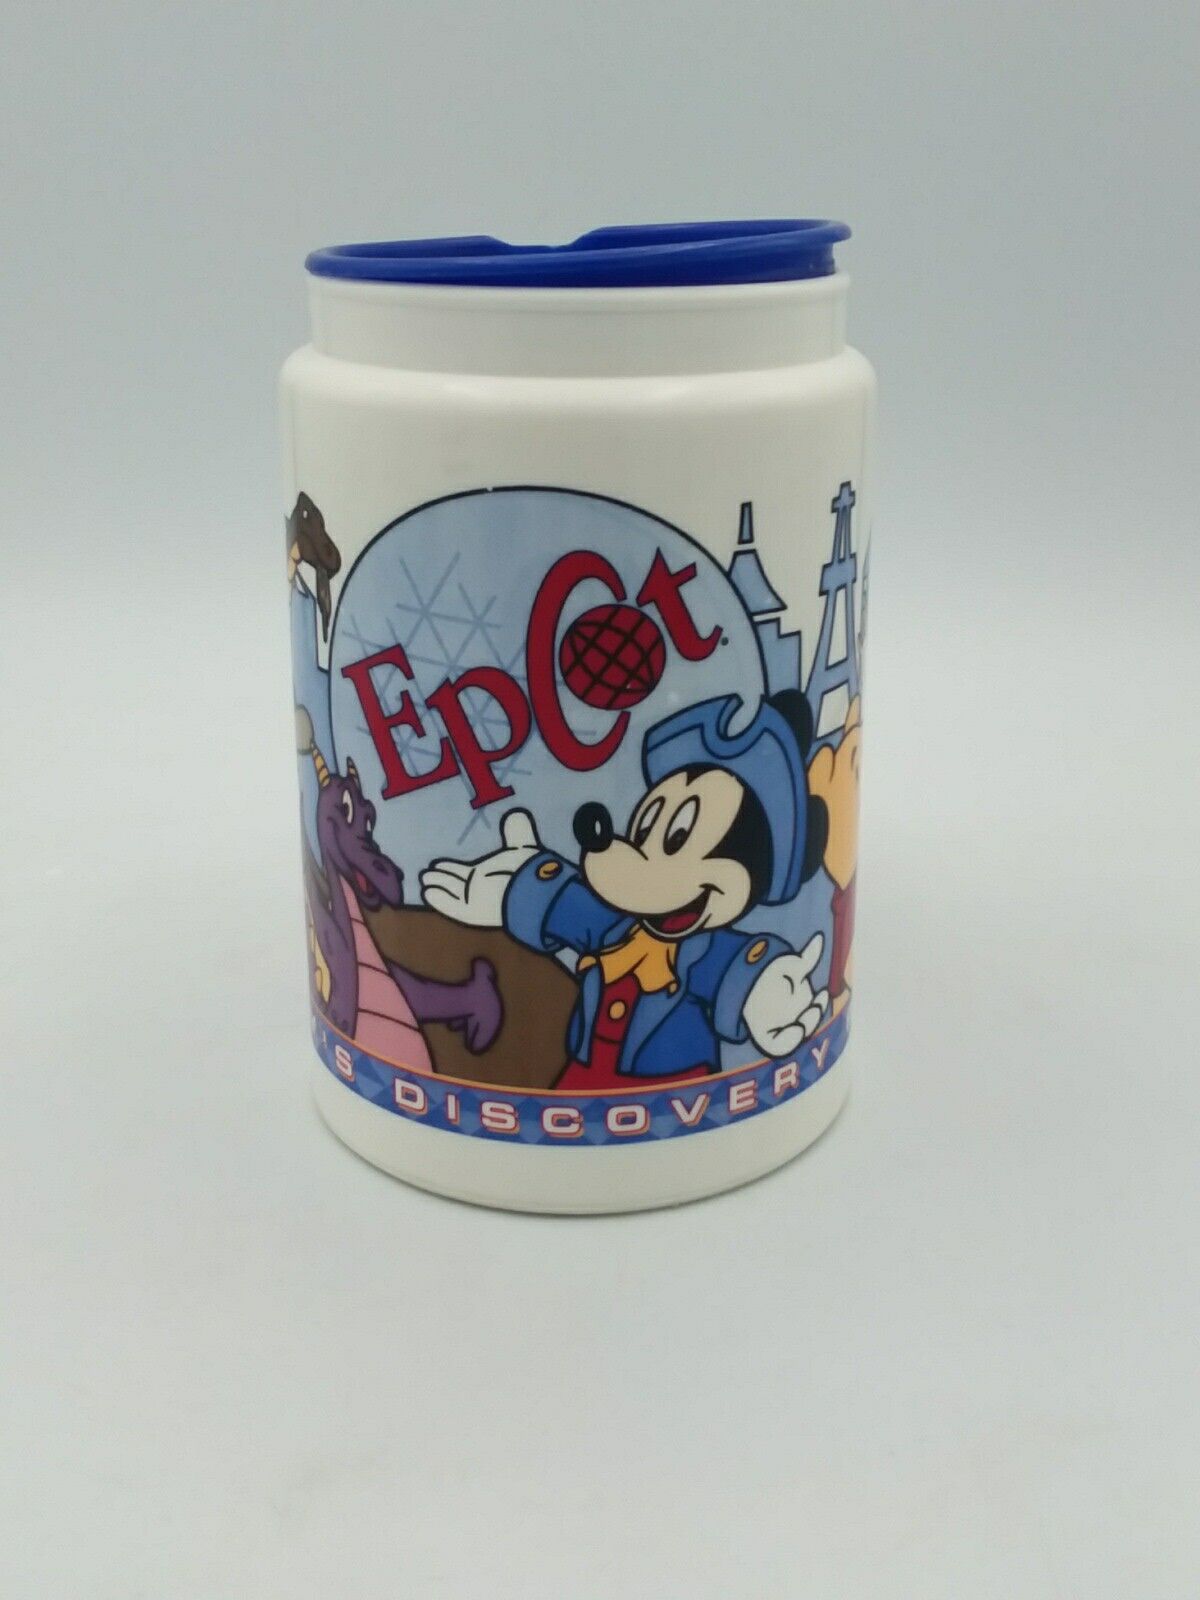 Vintage Disney Epcot Disney\'s Discovery Park Insulated Mug Whirley